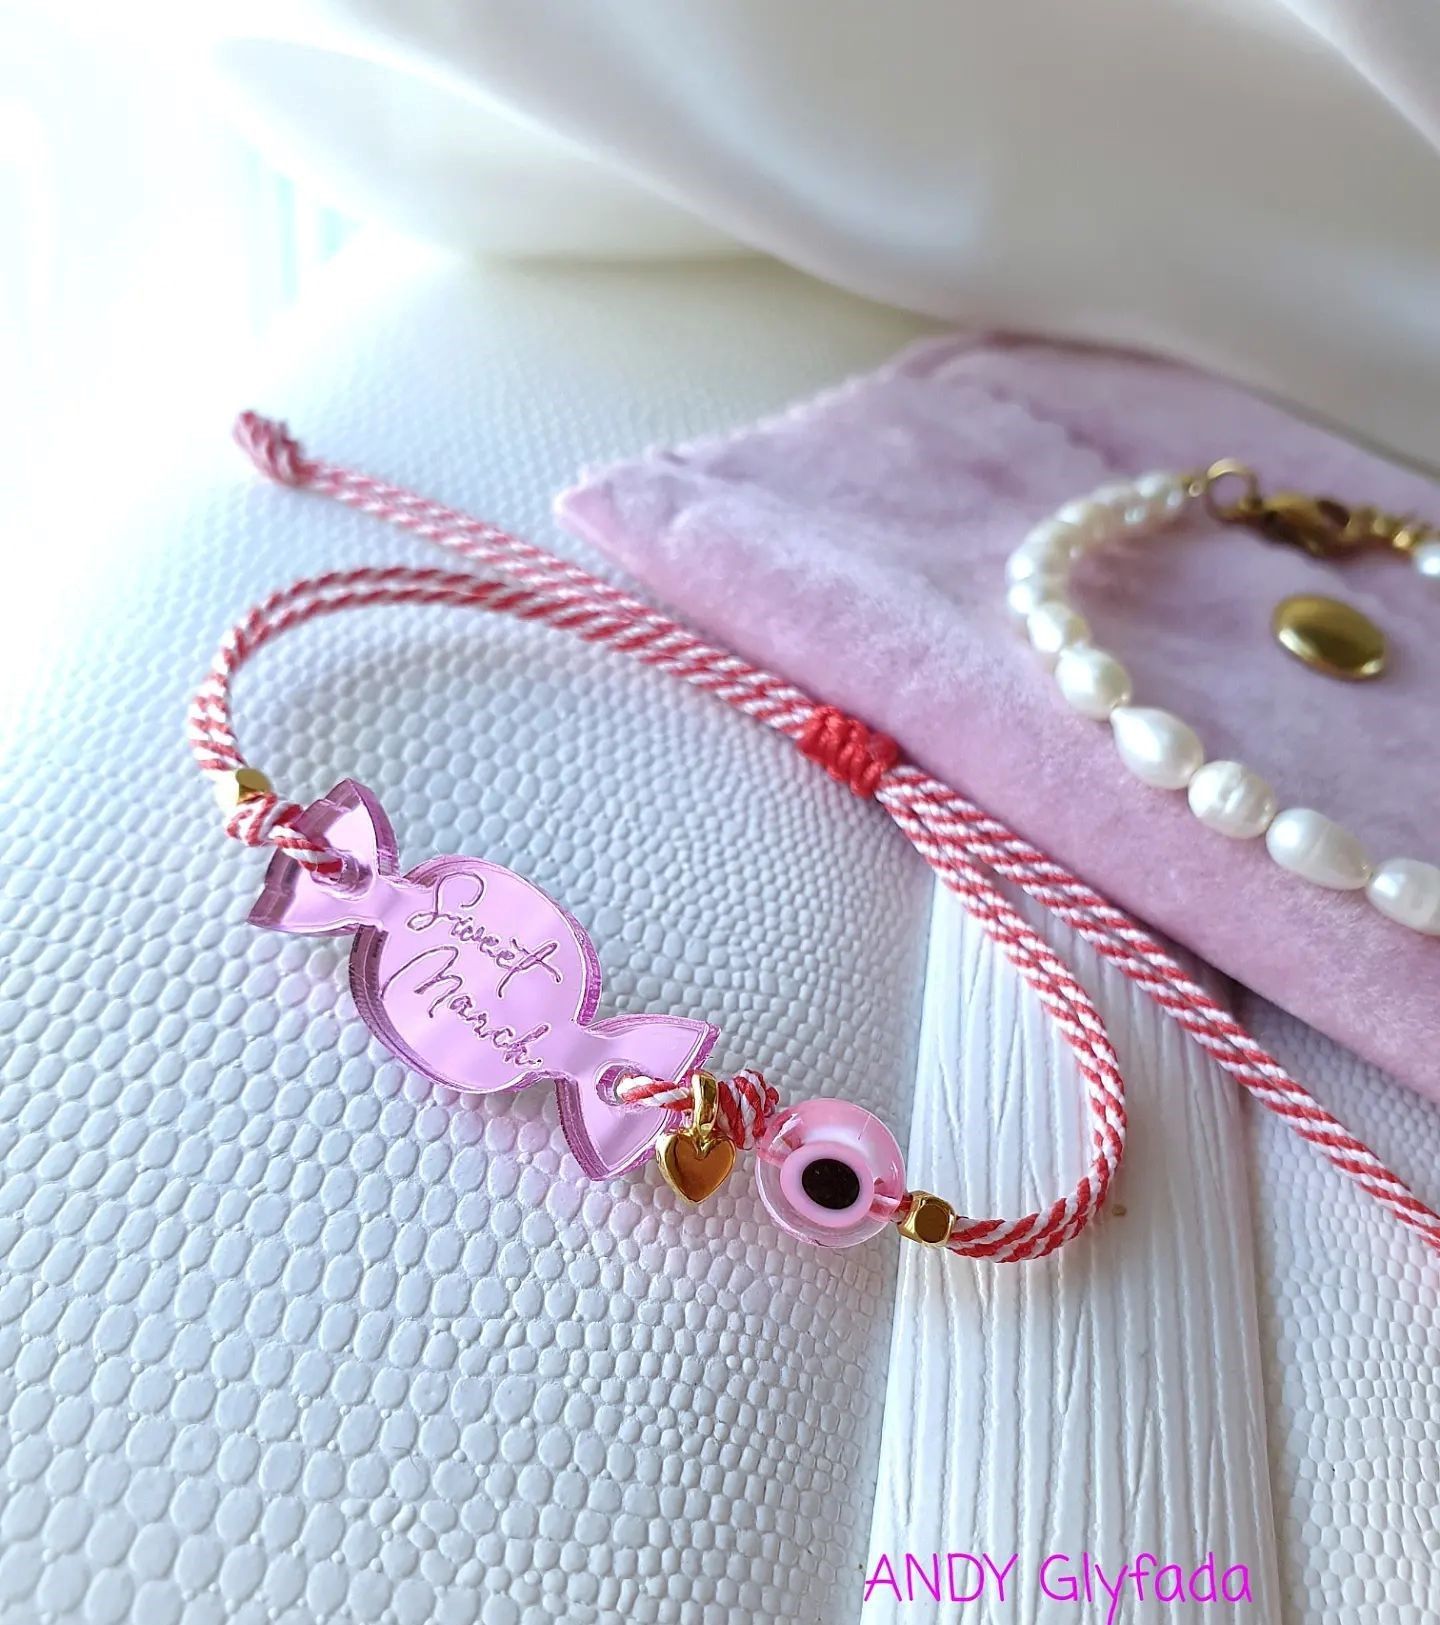 Handmade March Bracelet Candy Plexiglass with Macrame Cotton Cord and Glass Evil Eye